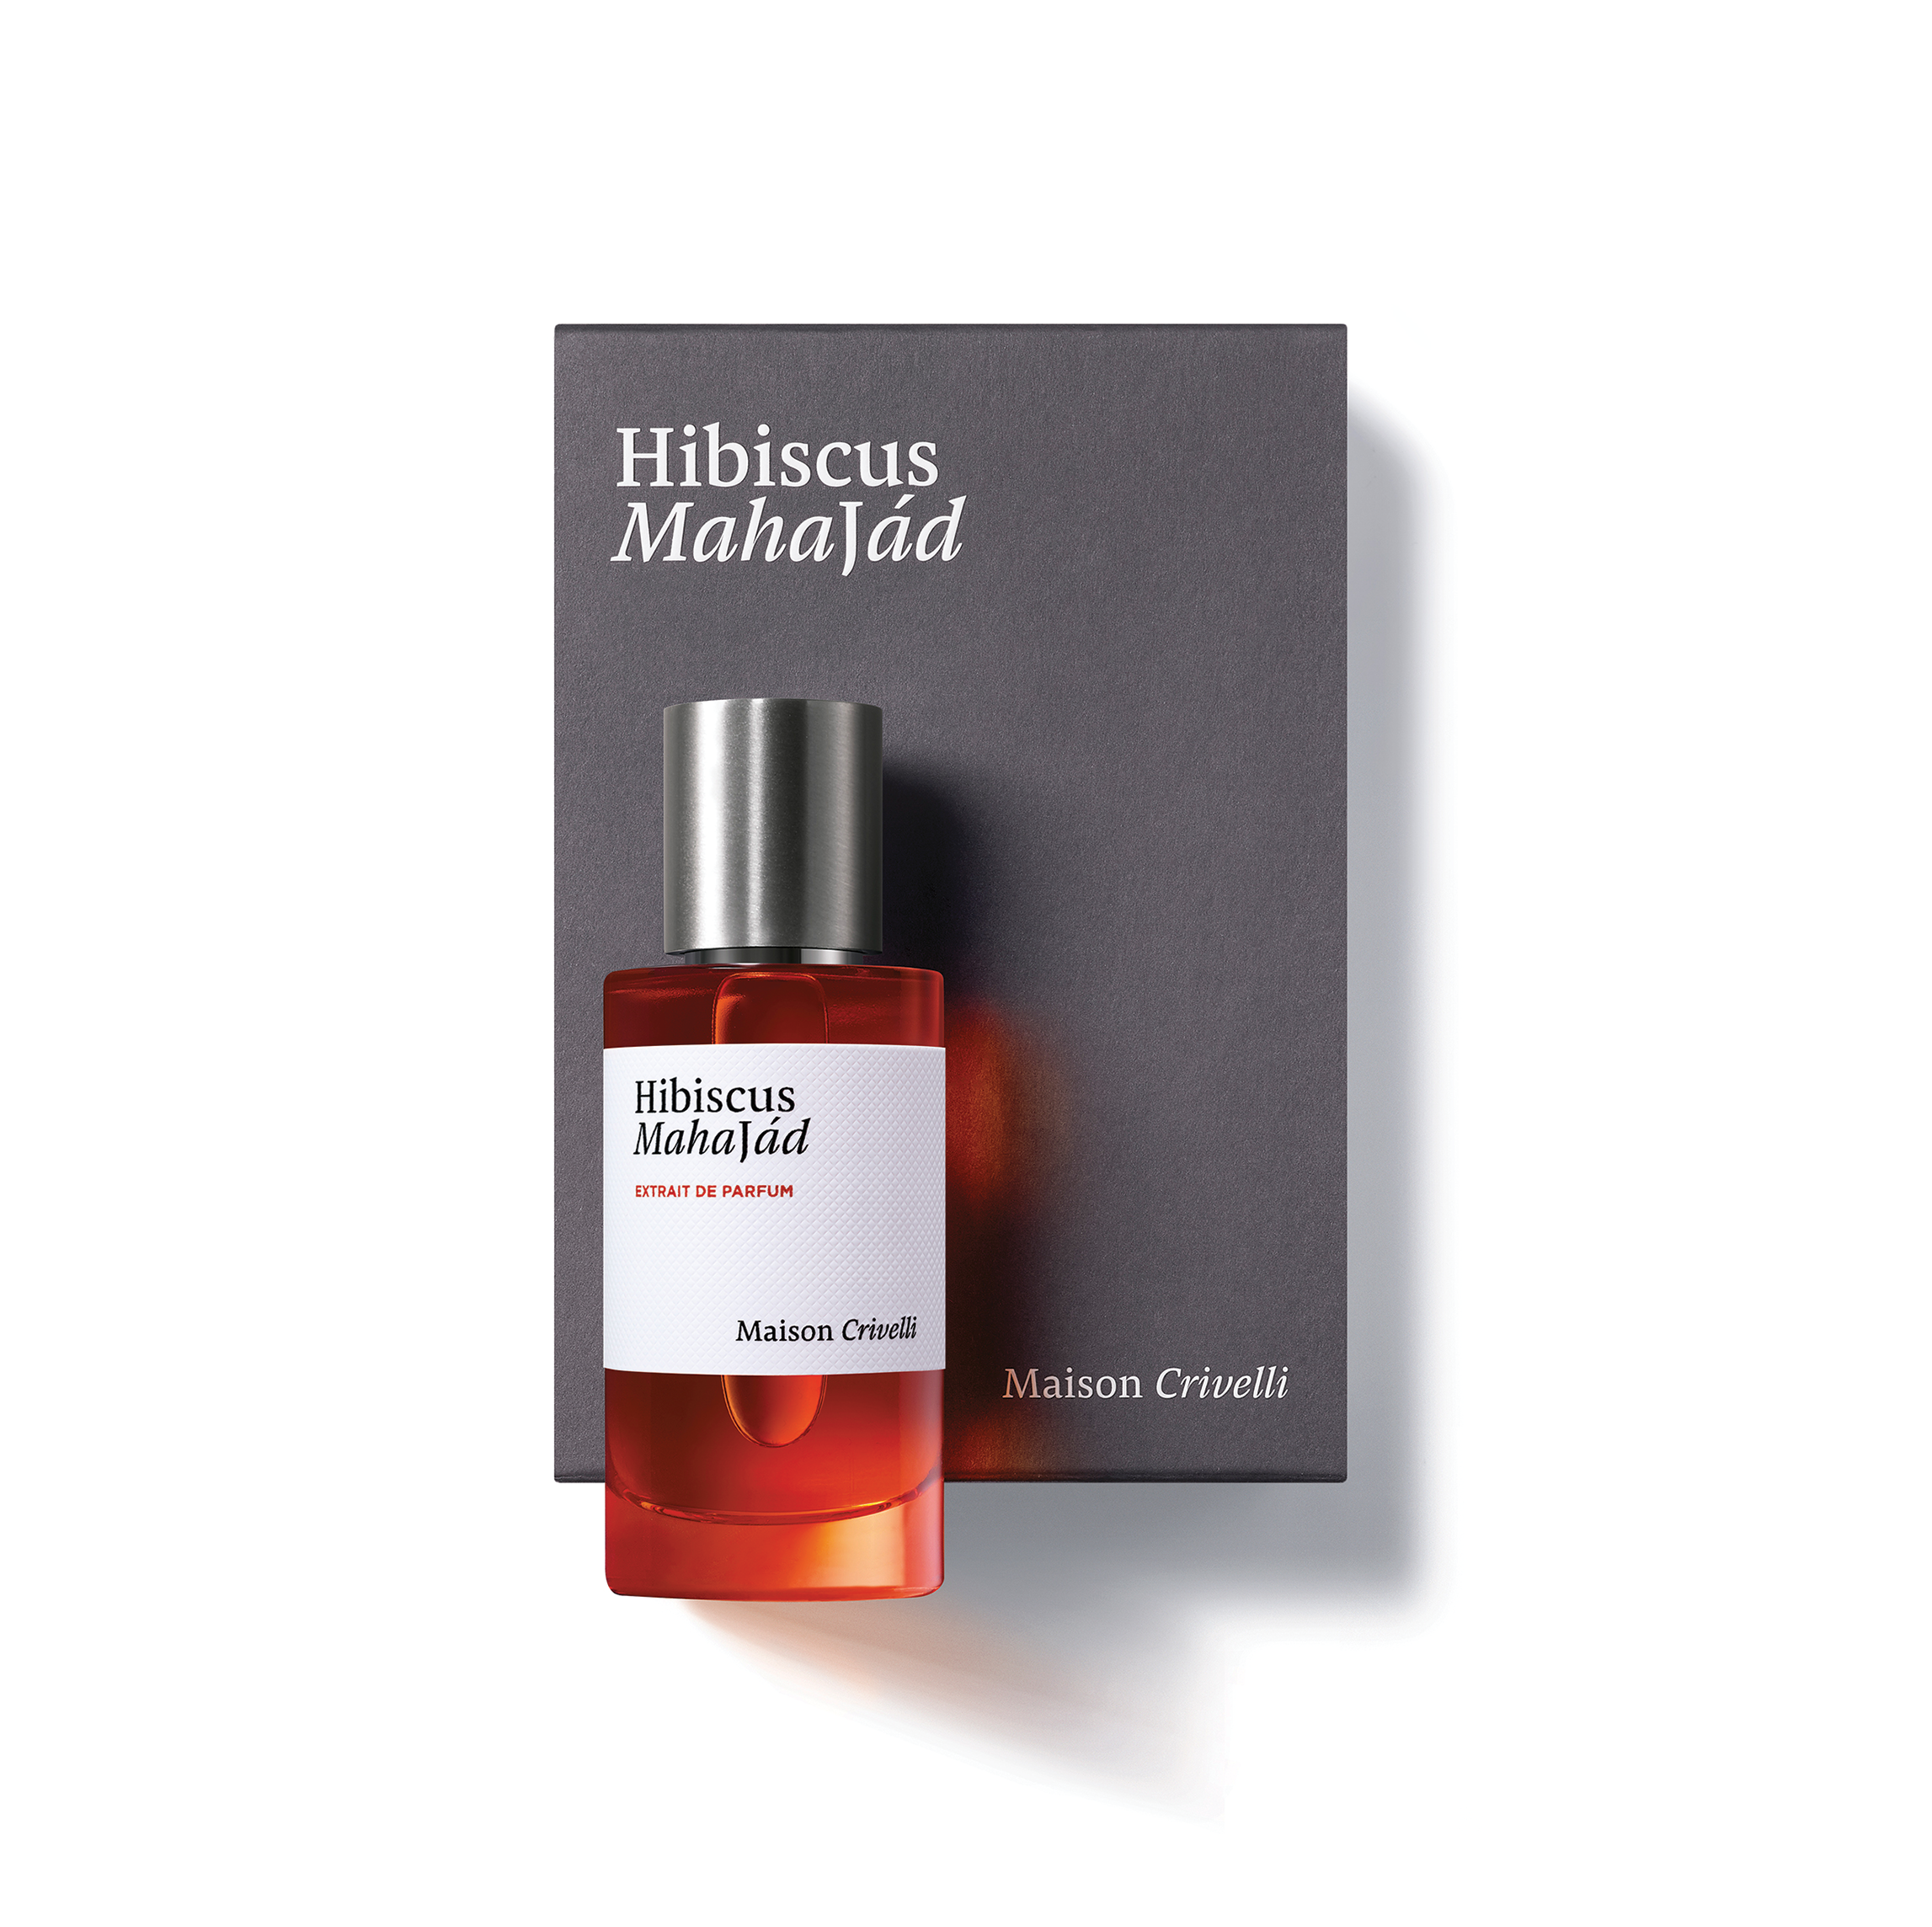 Hibiscus-Mahajad-perfume-extract-Box.png